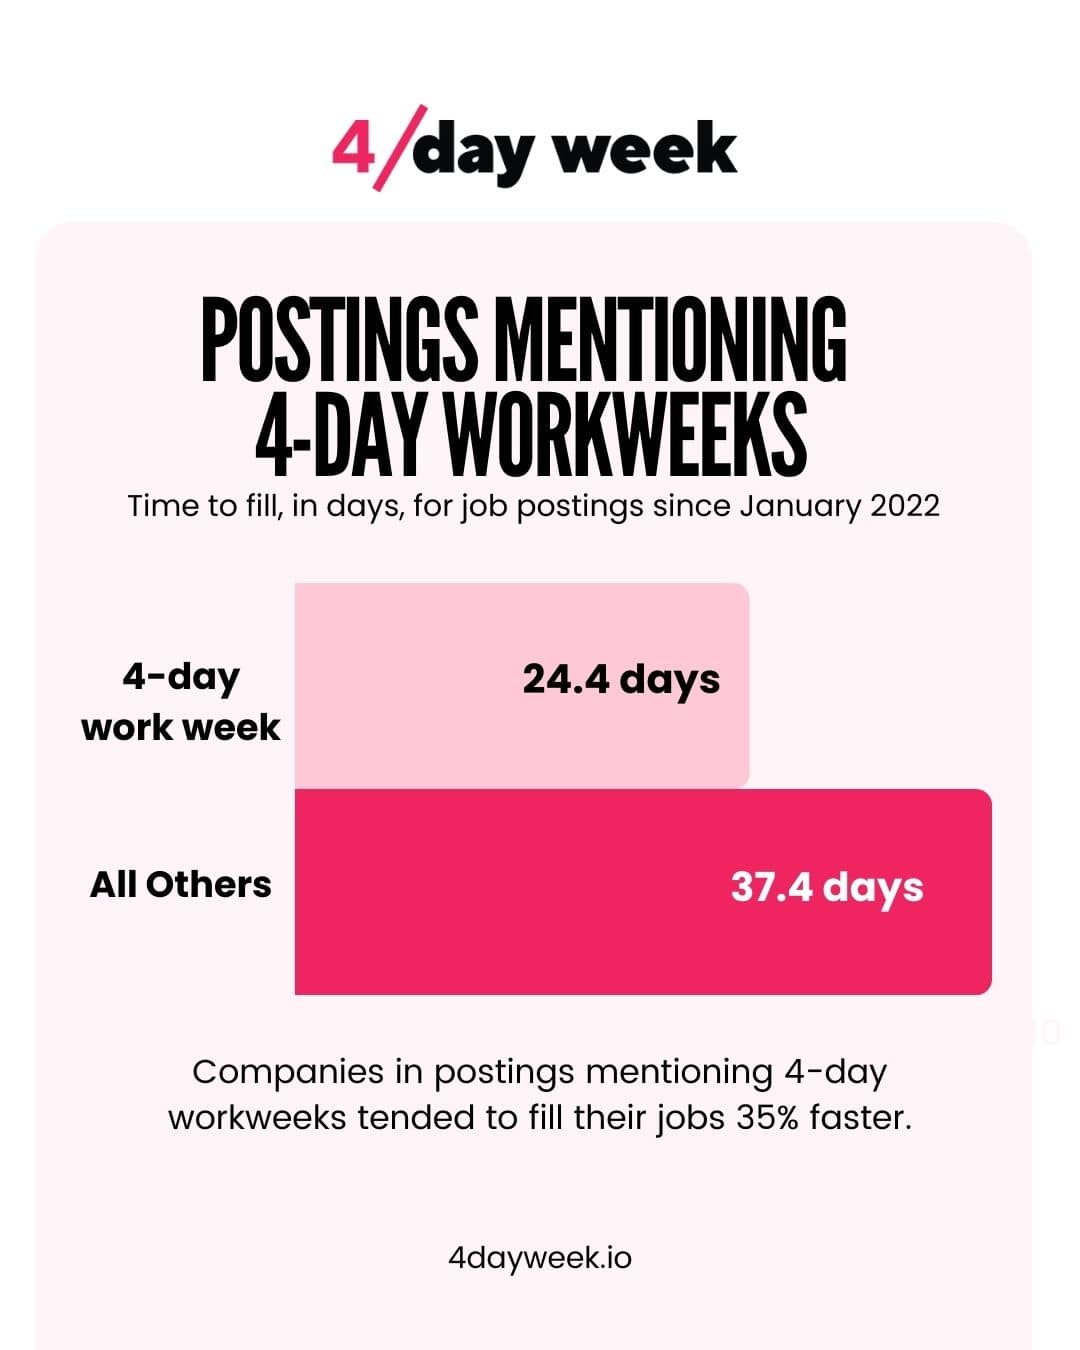  Improved Hiring Efficiency with 4-Day Workweeks
